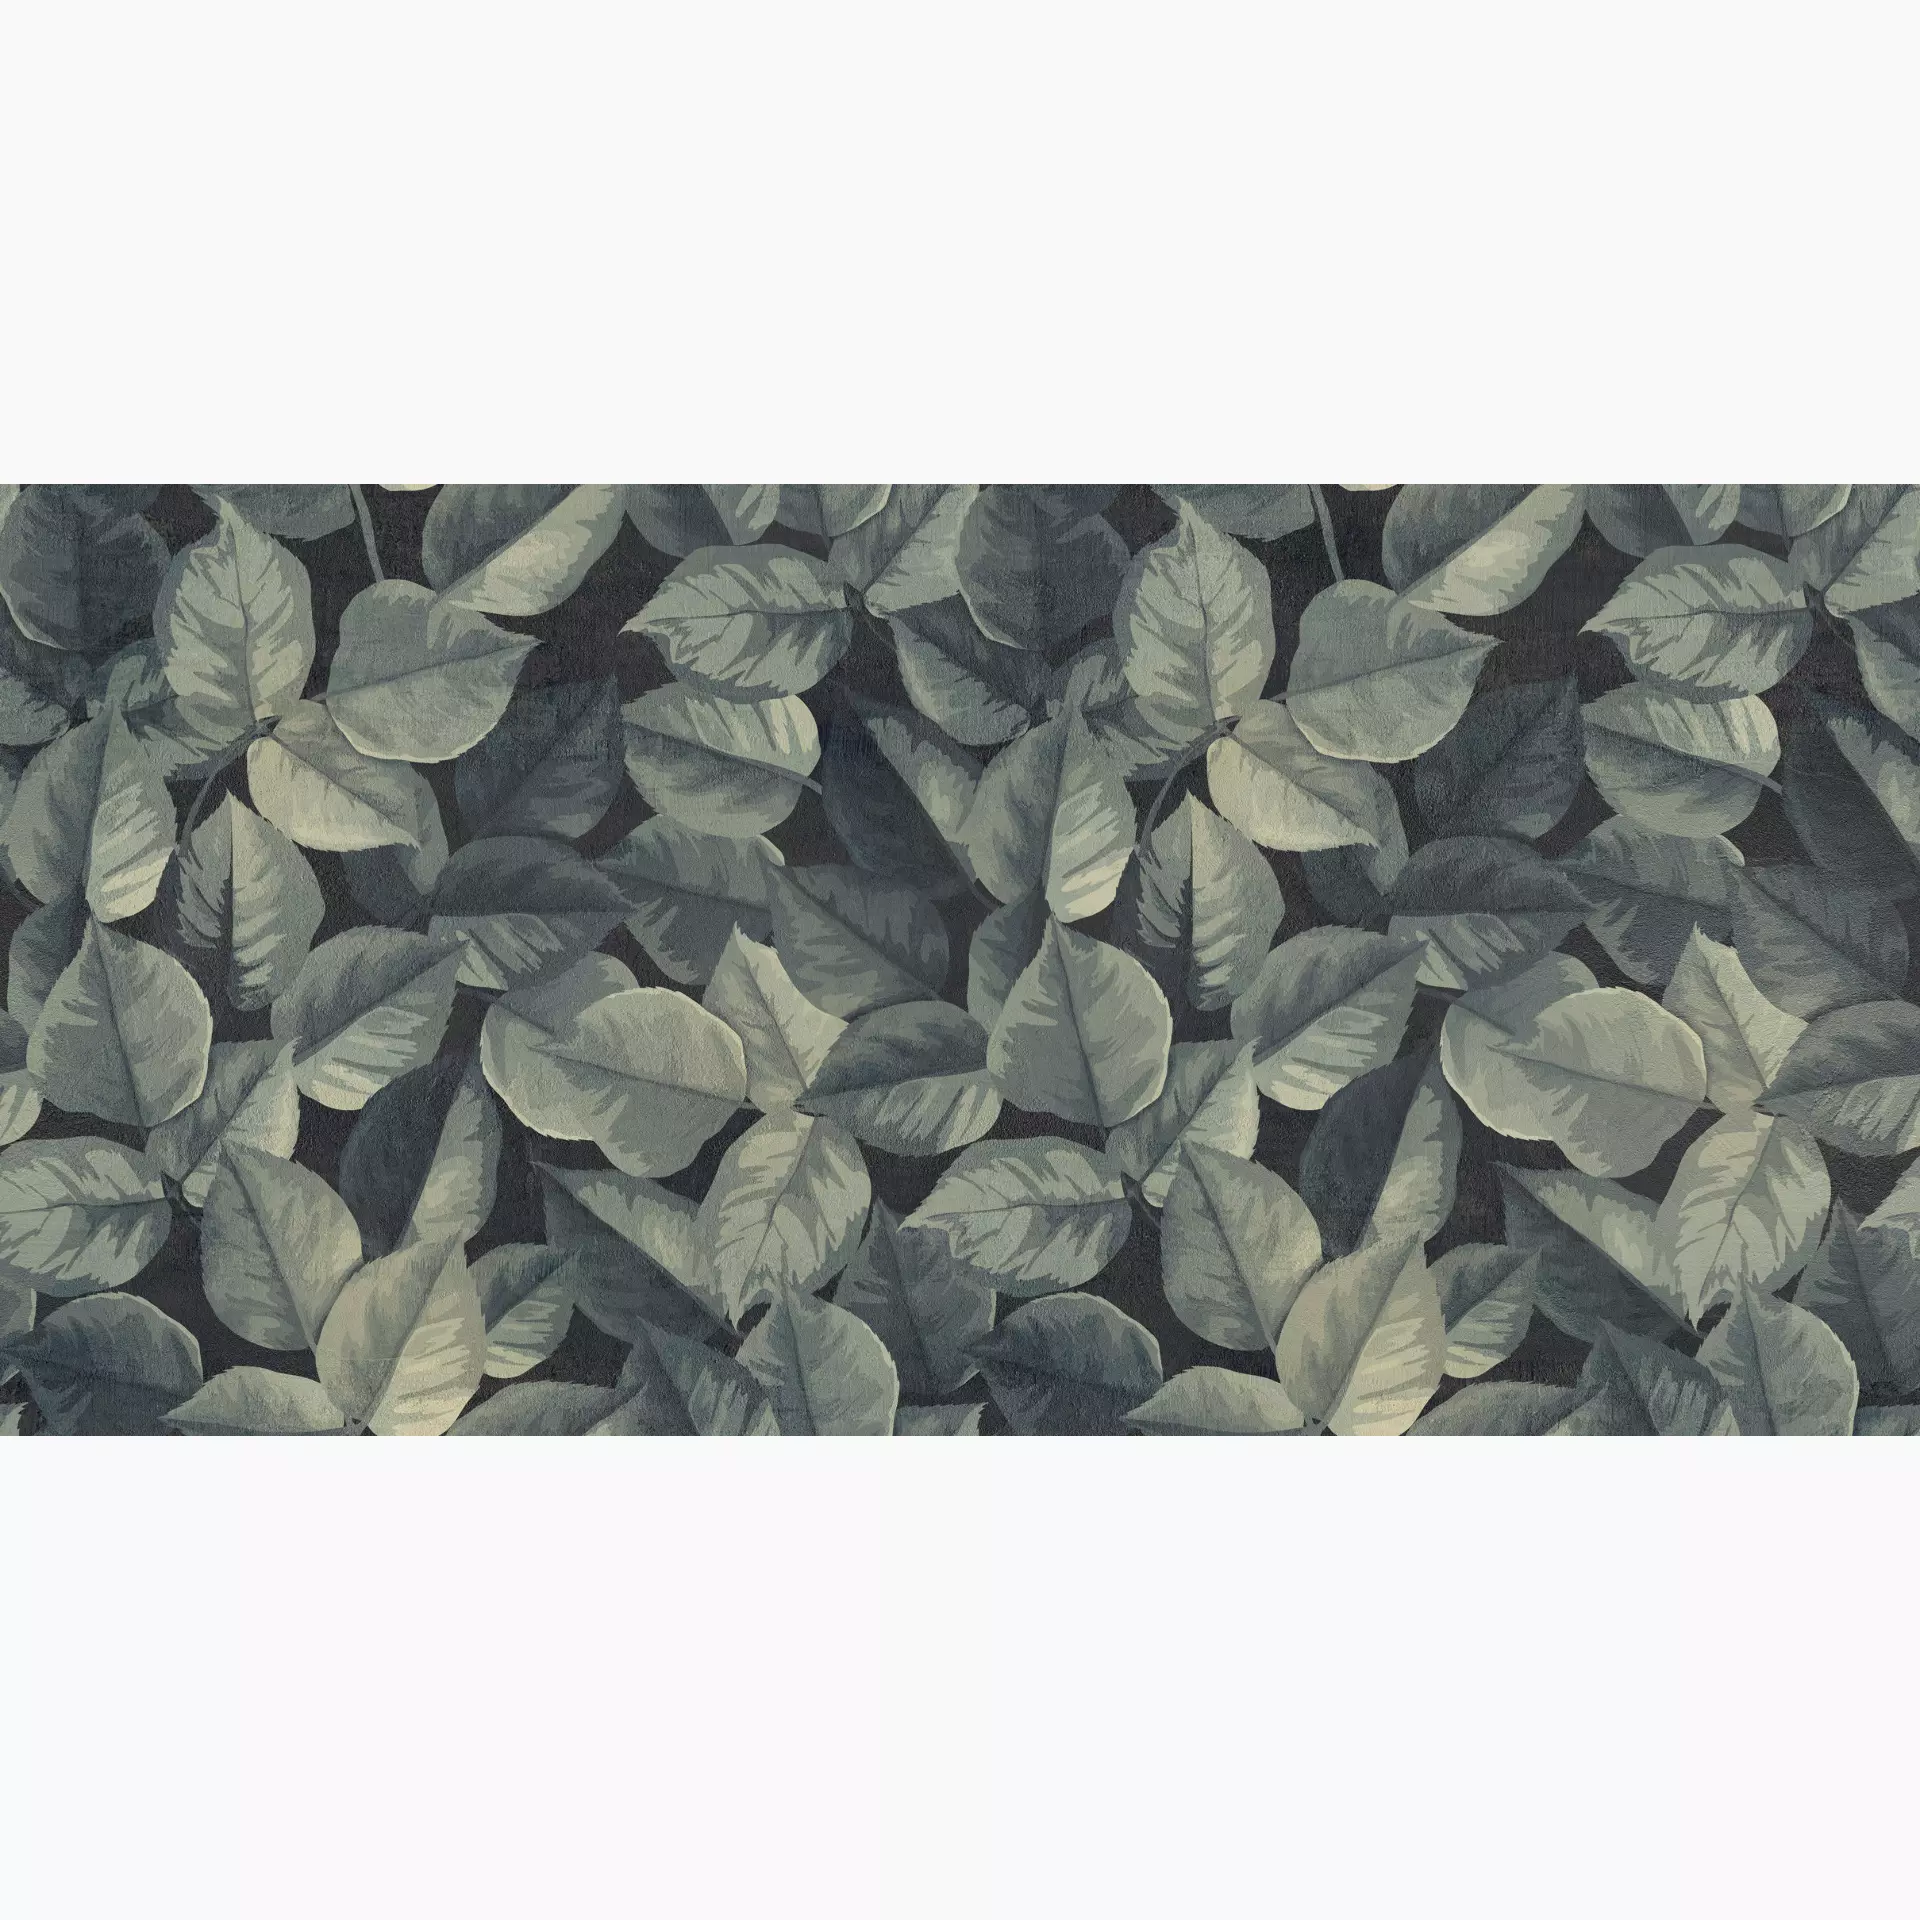 ABK Wide & Style Mini Foliage Naturale Decor PF60008438 60x120cm rectified 7mm